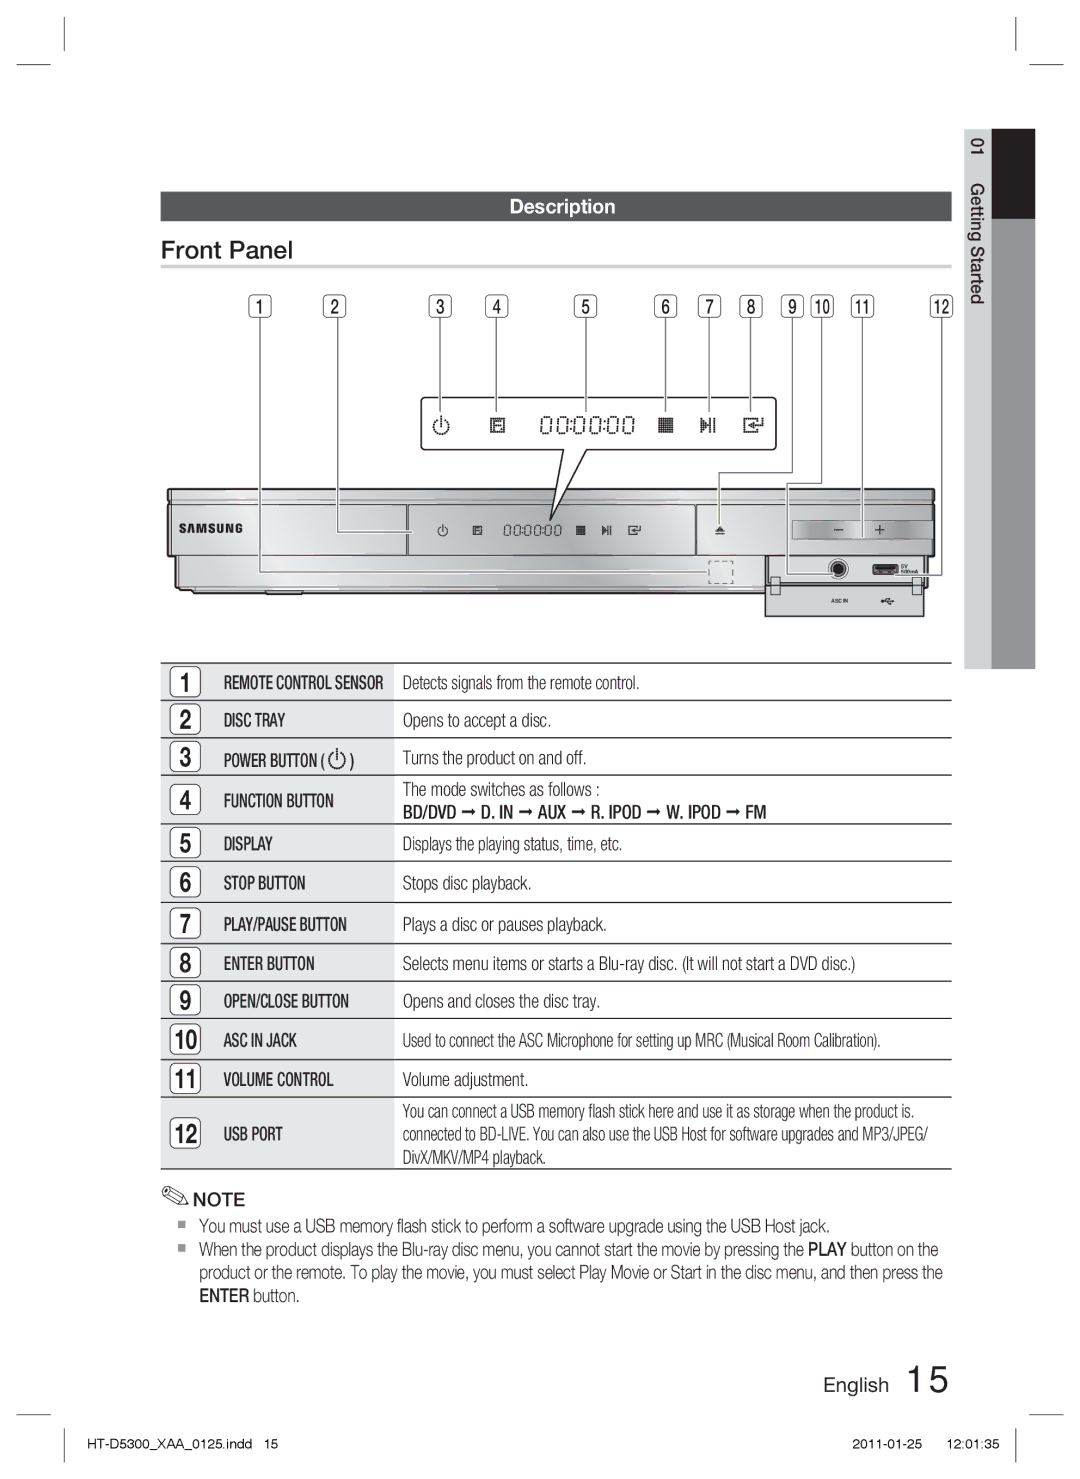 Samsung HT-D5300 user manual Front Panel, Description 